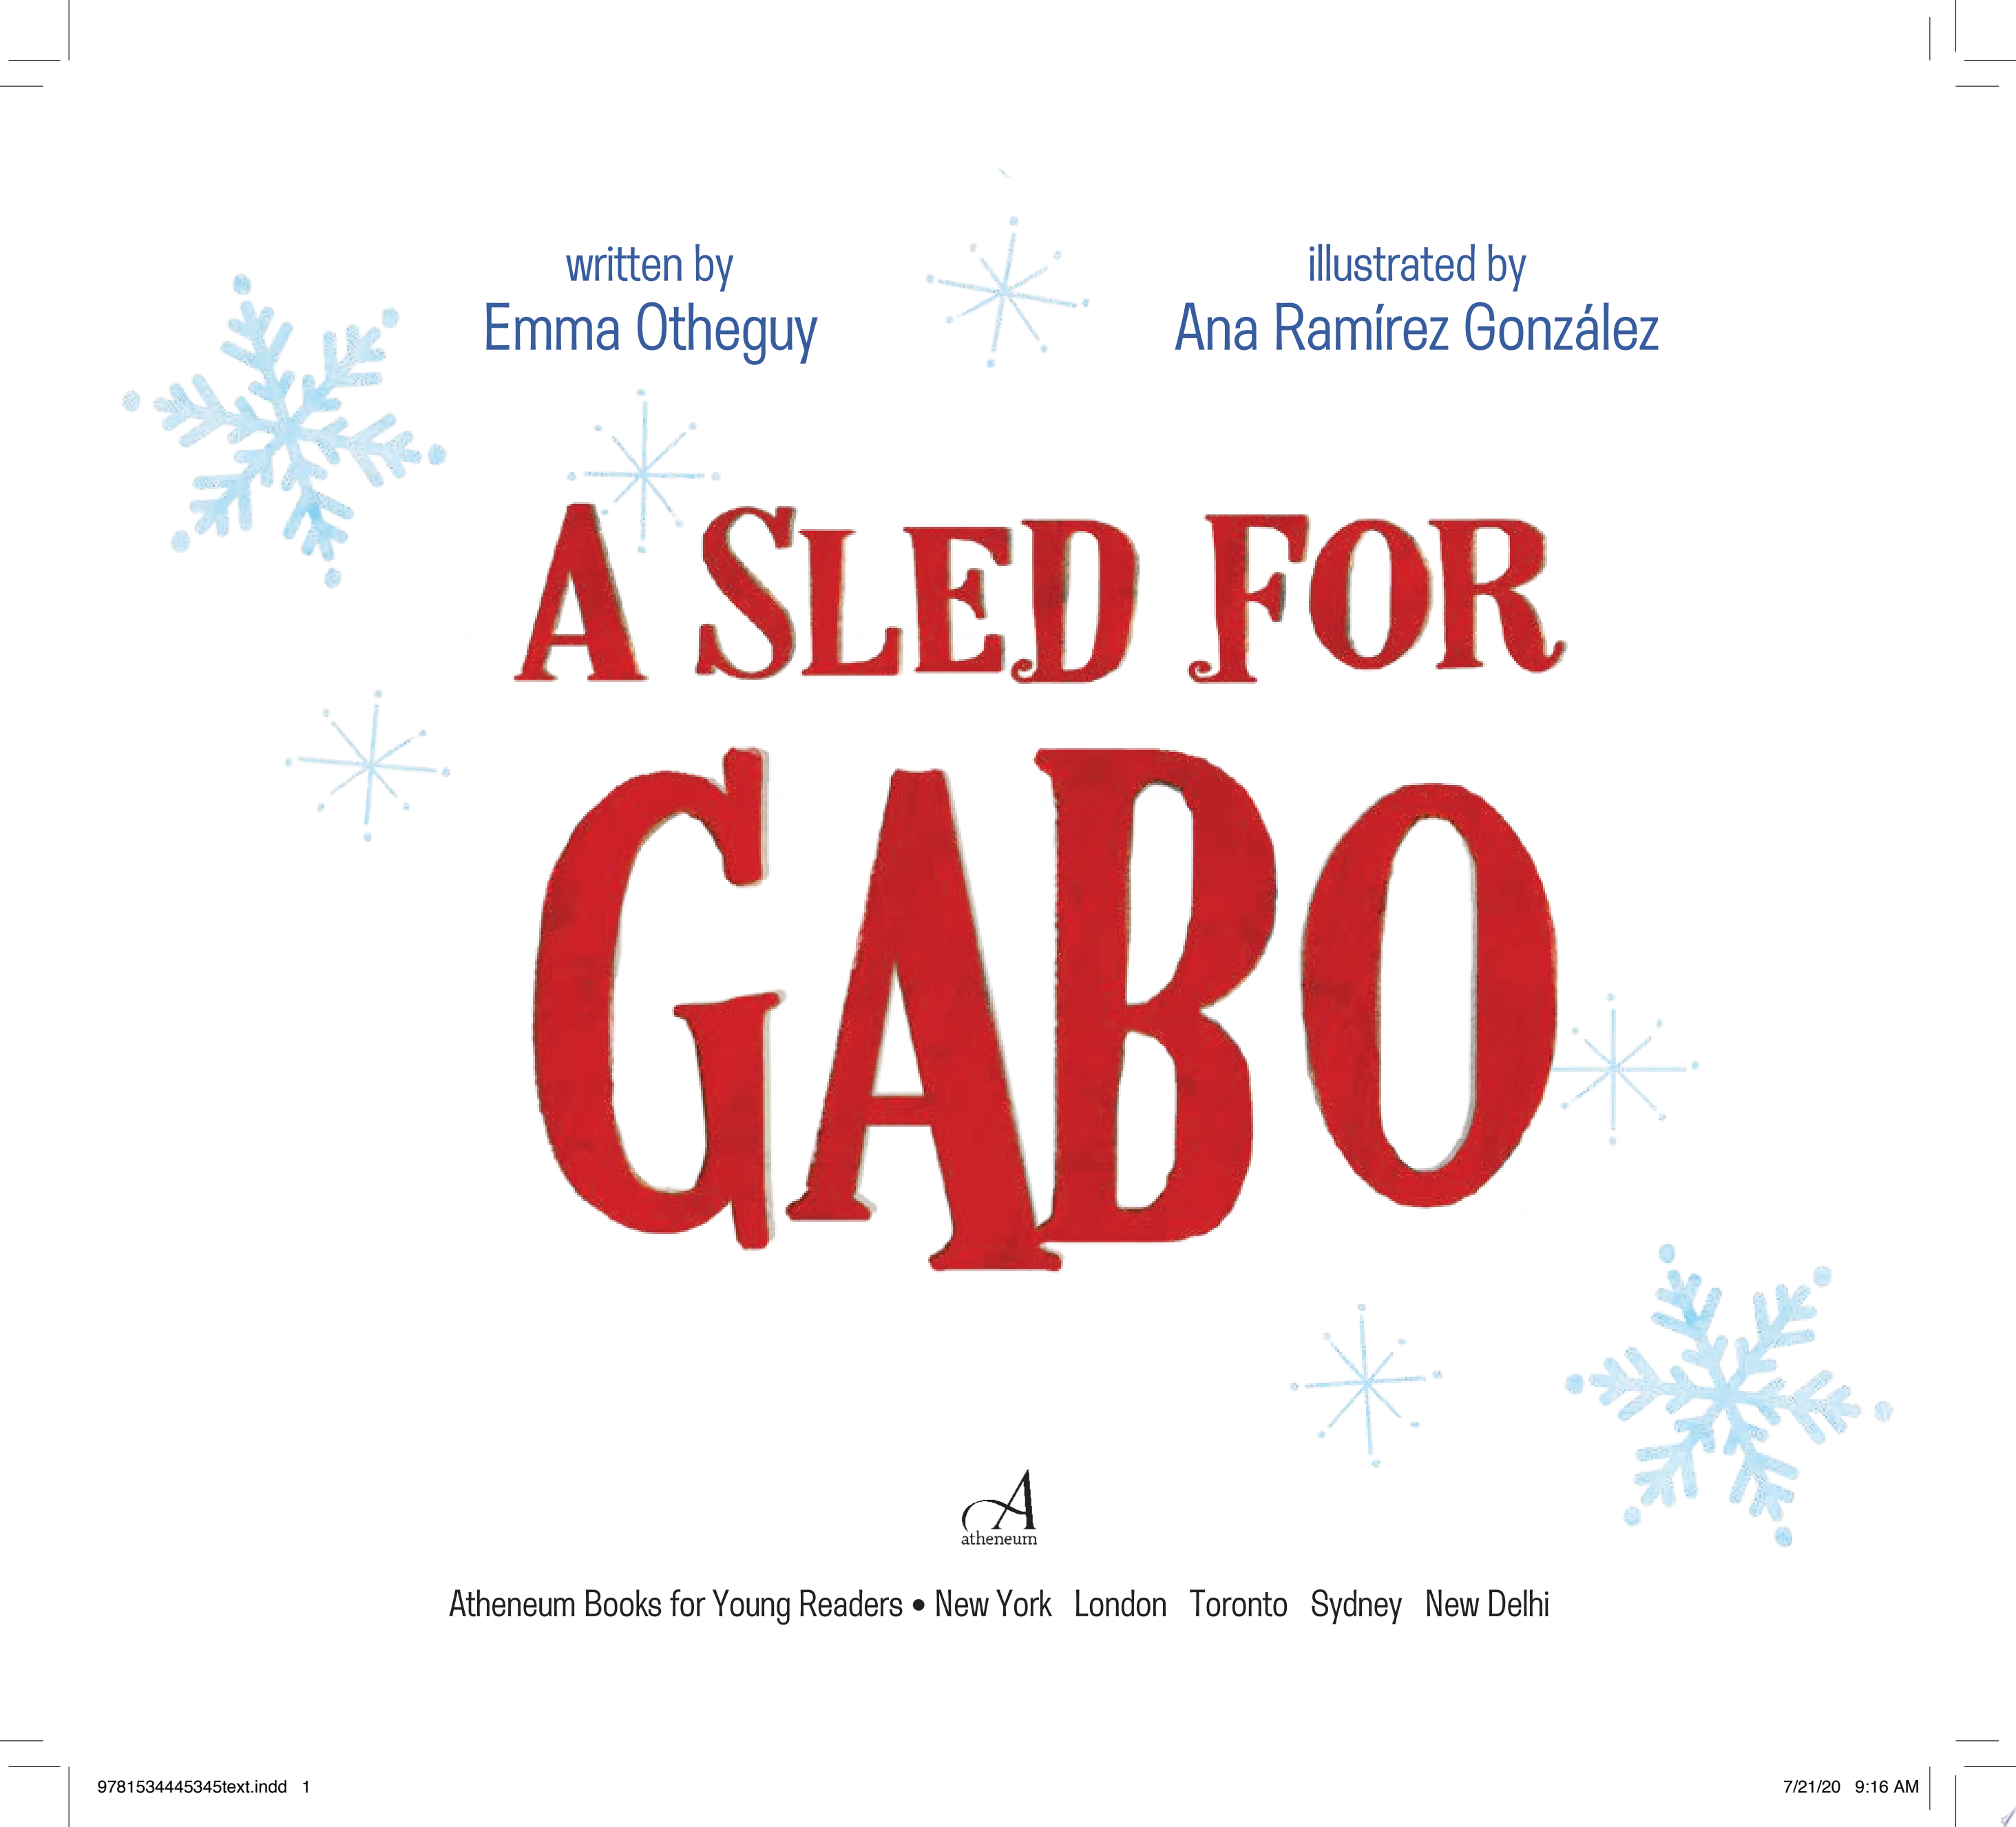 Image for "A Sled for Gabo"